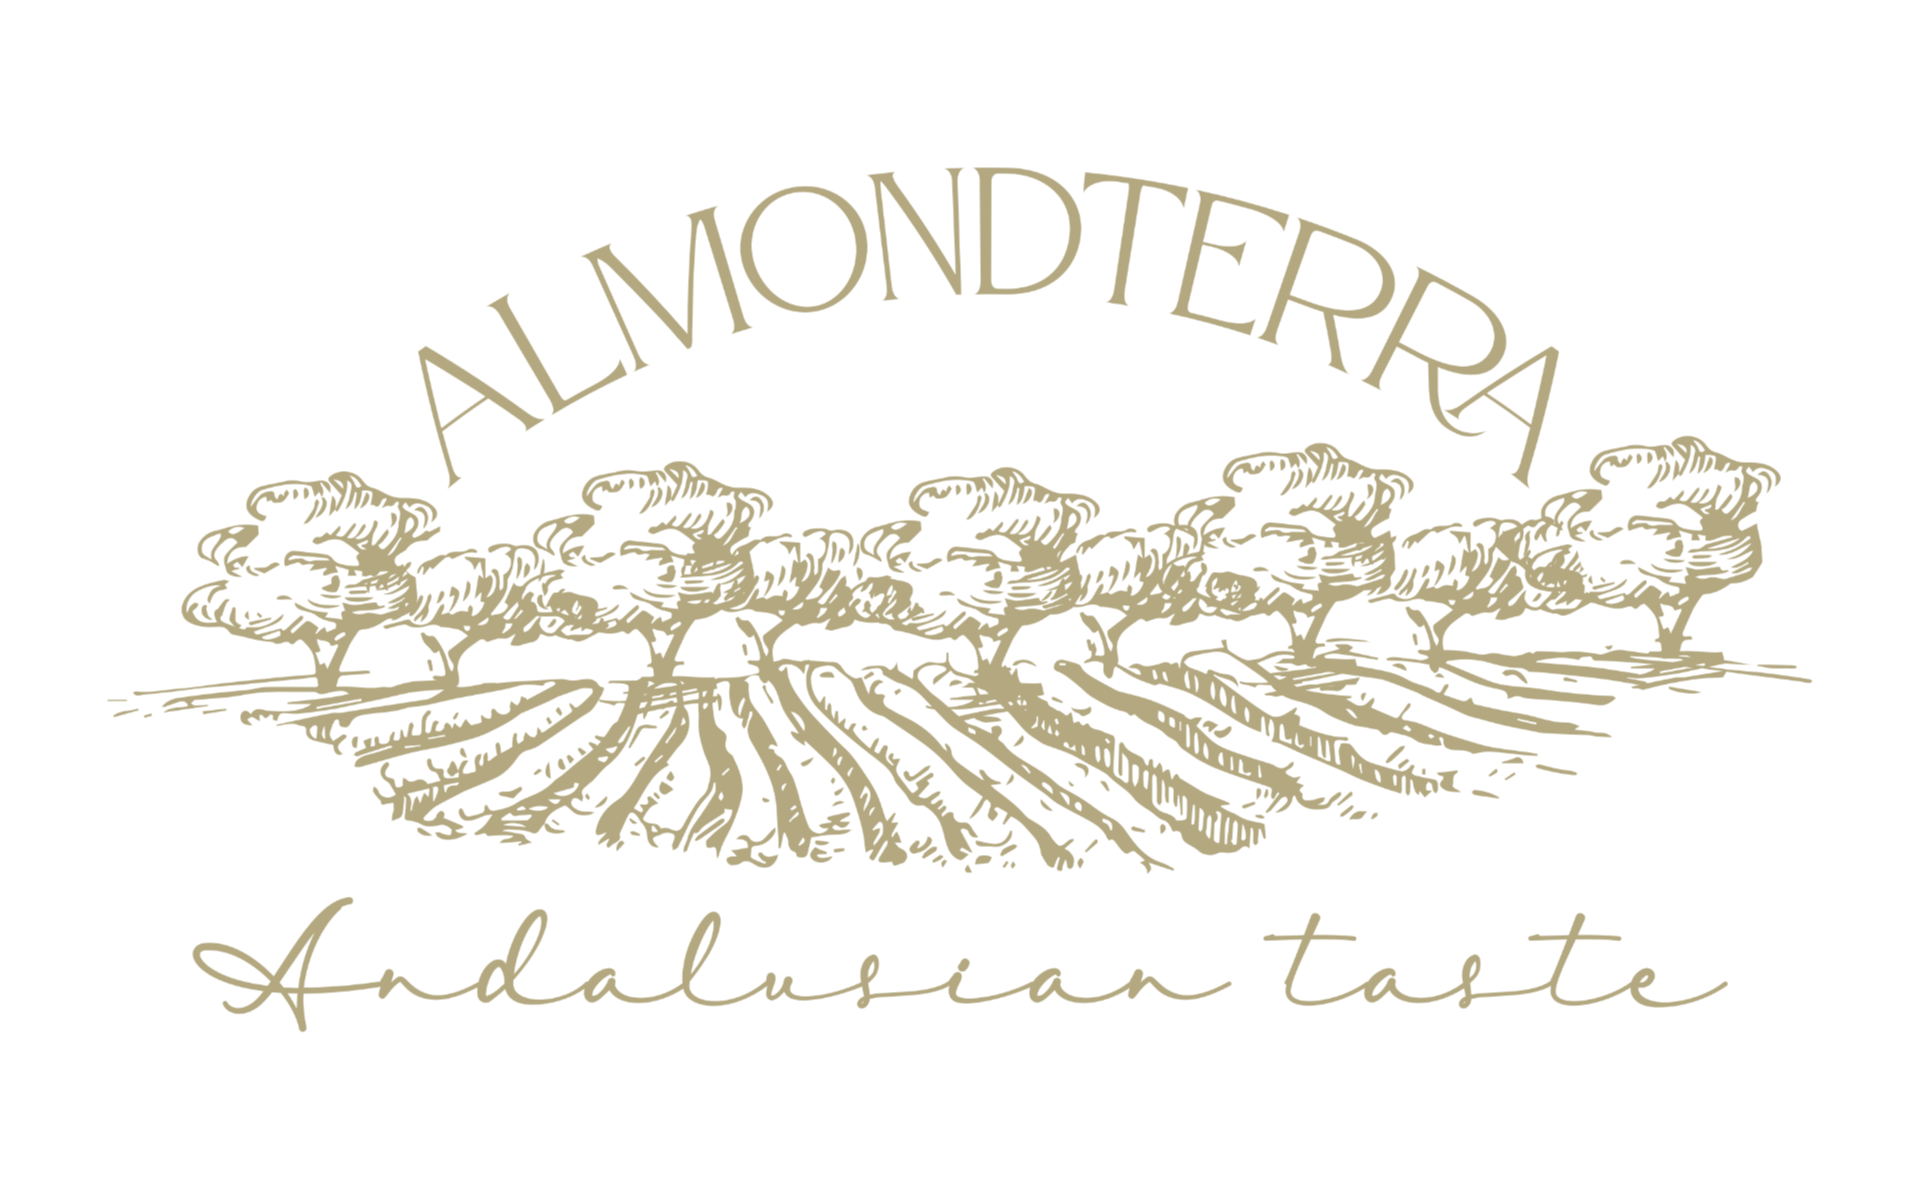 Almondterra Andalusian Taste